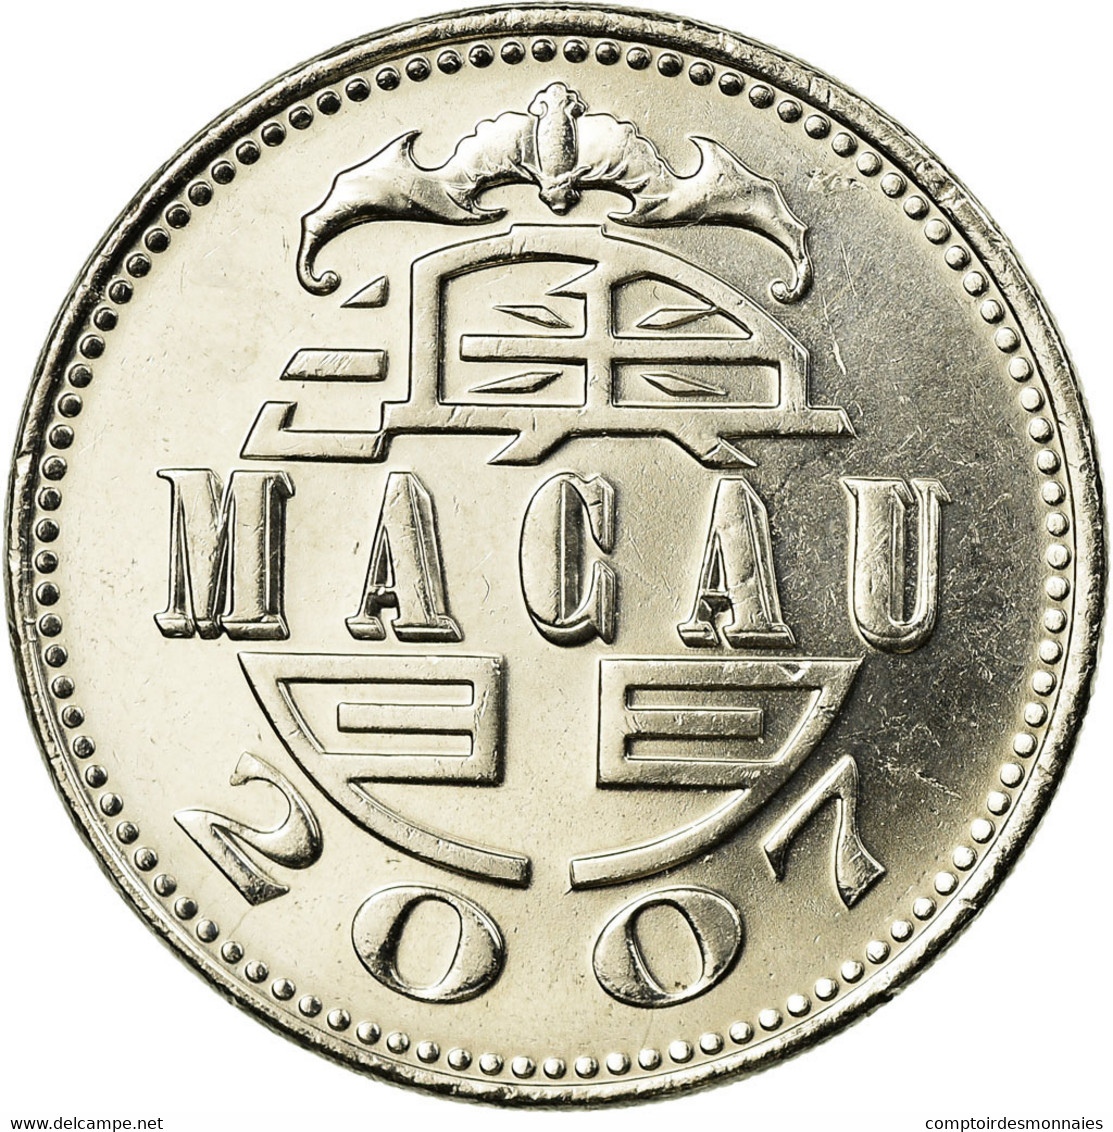 Monnaie, Macau, Pataca, 2007, British Royal Mint, TTB, Copper-nickel, KM:57 - Macau